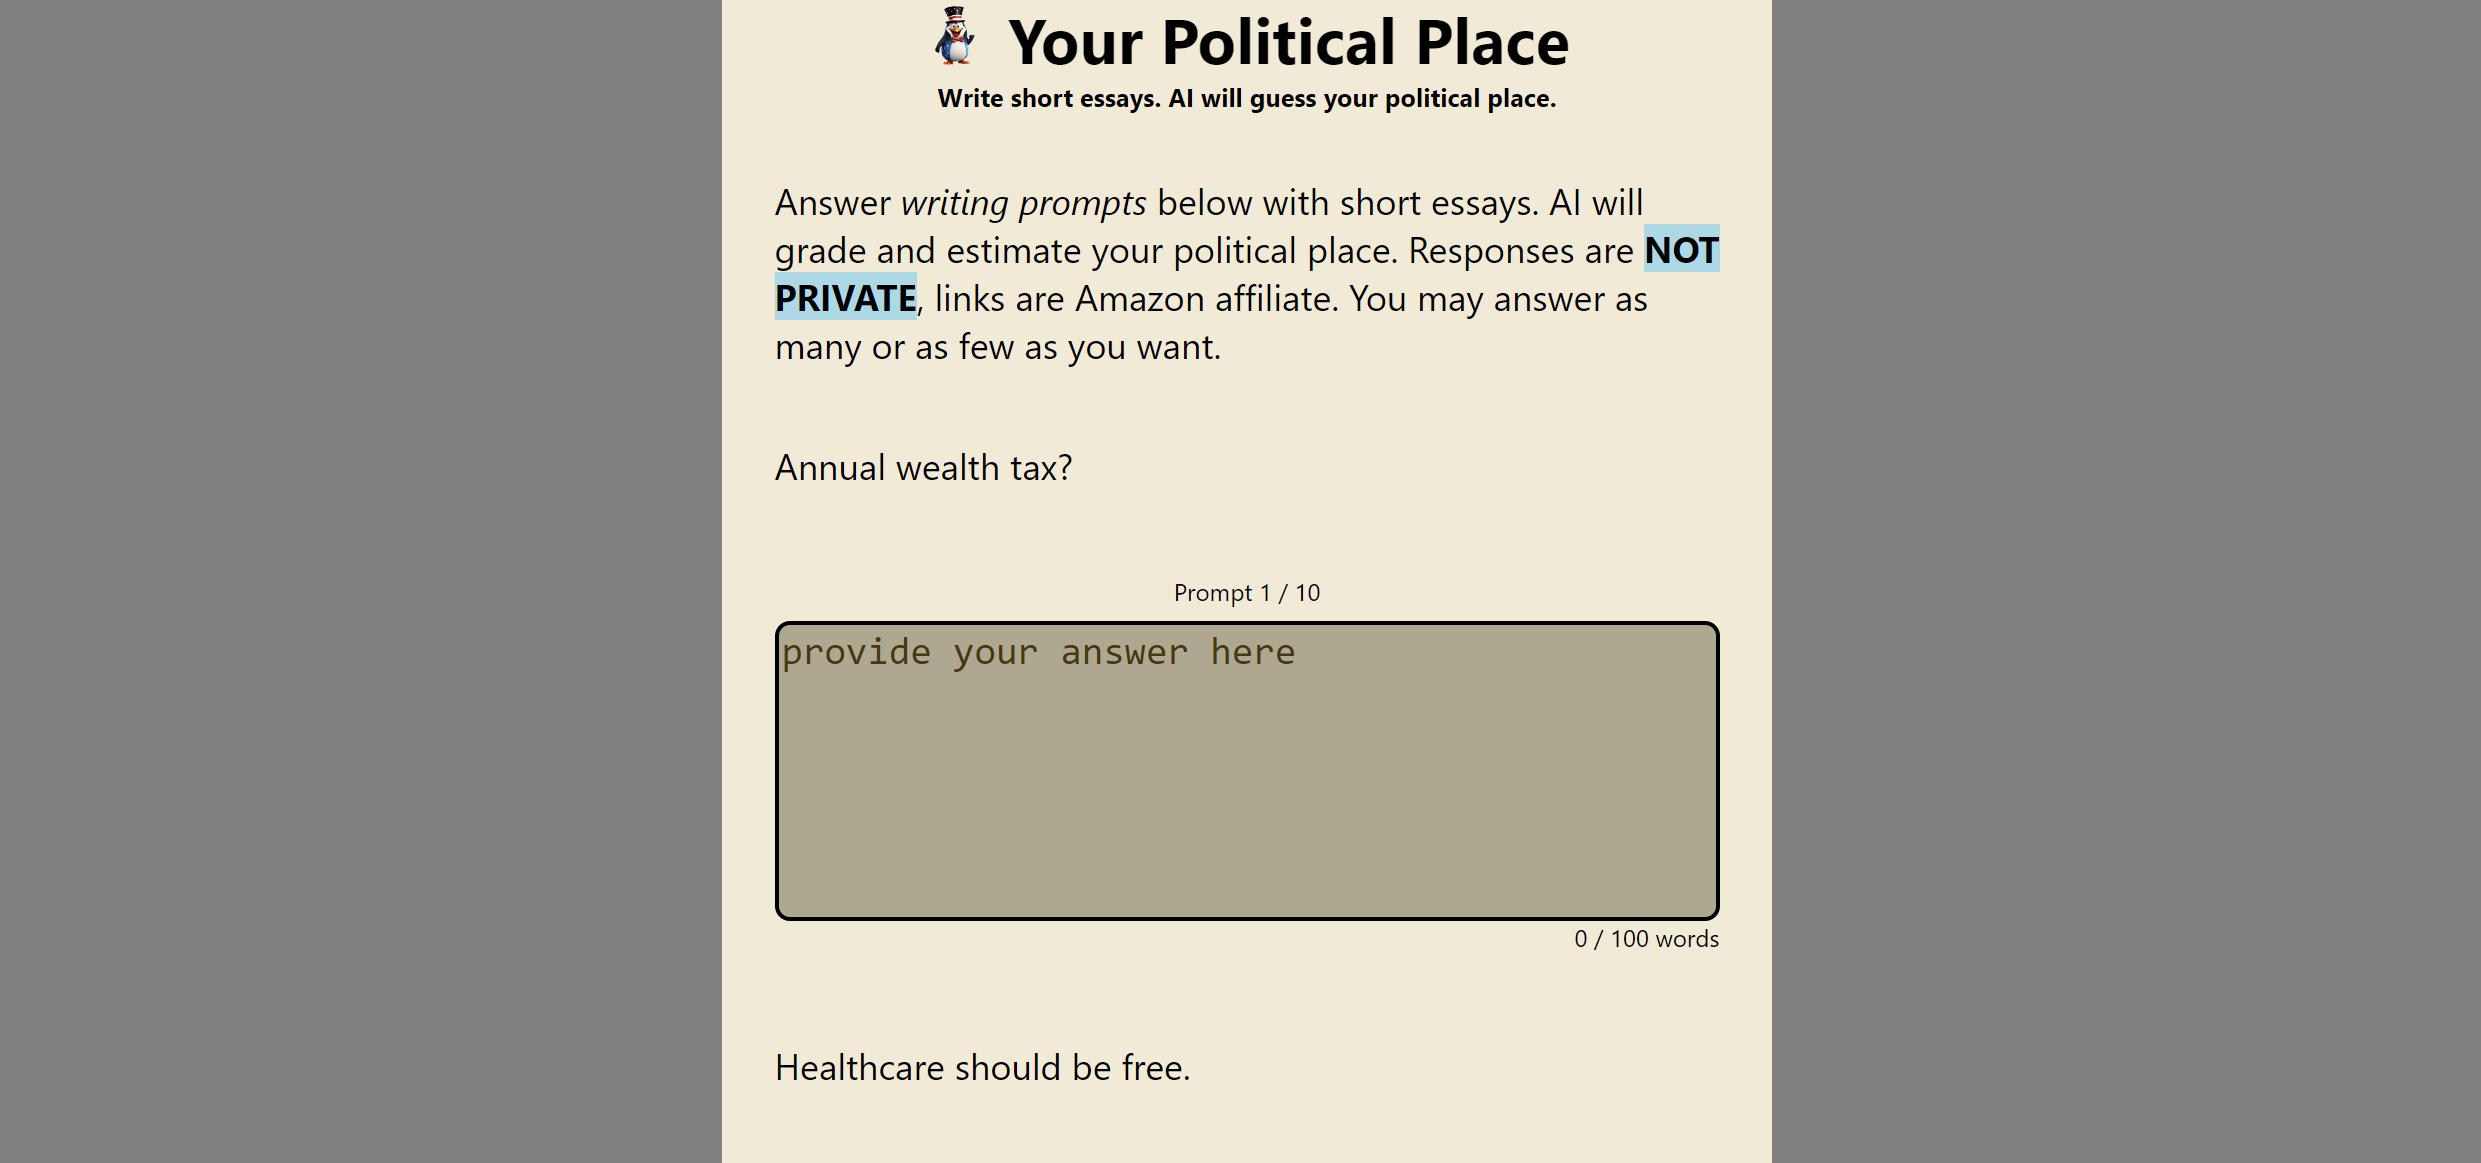 Your Political Place